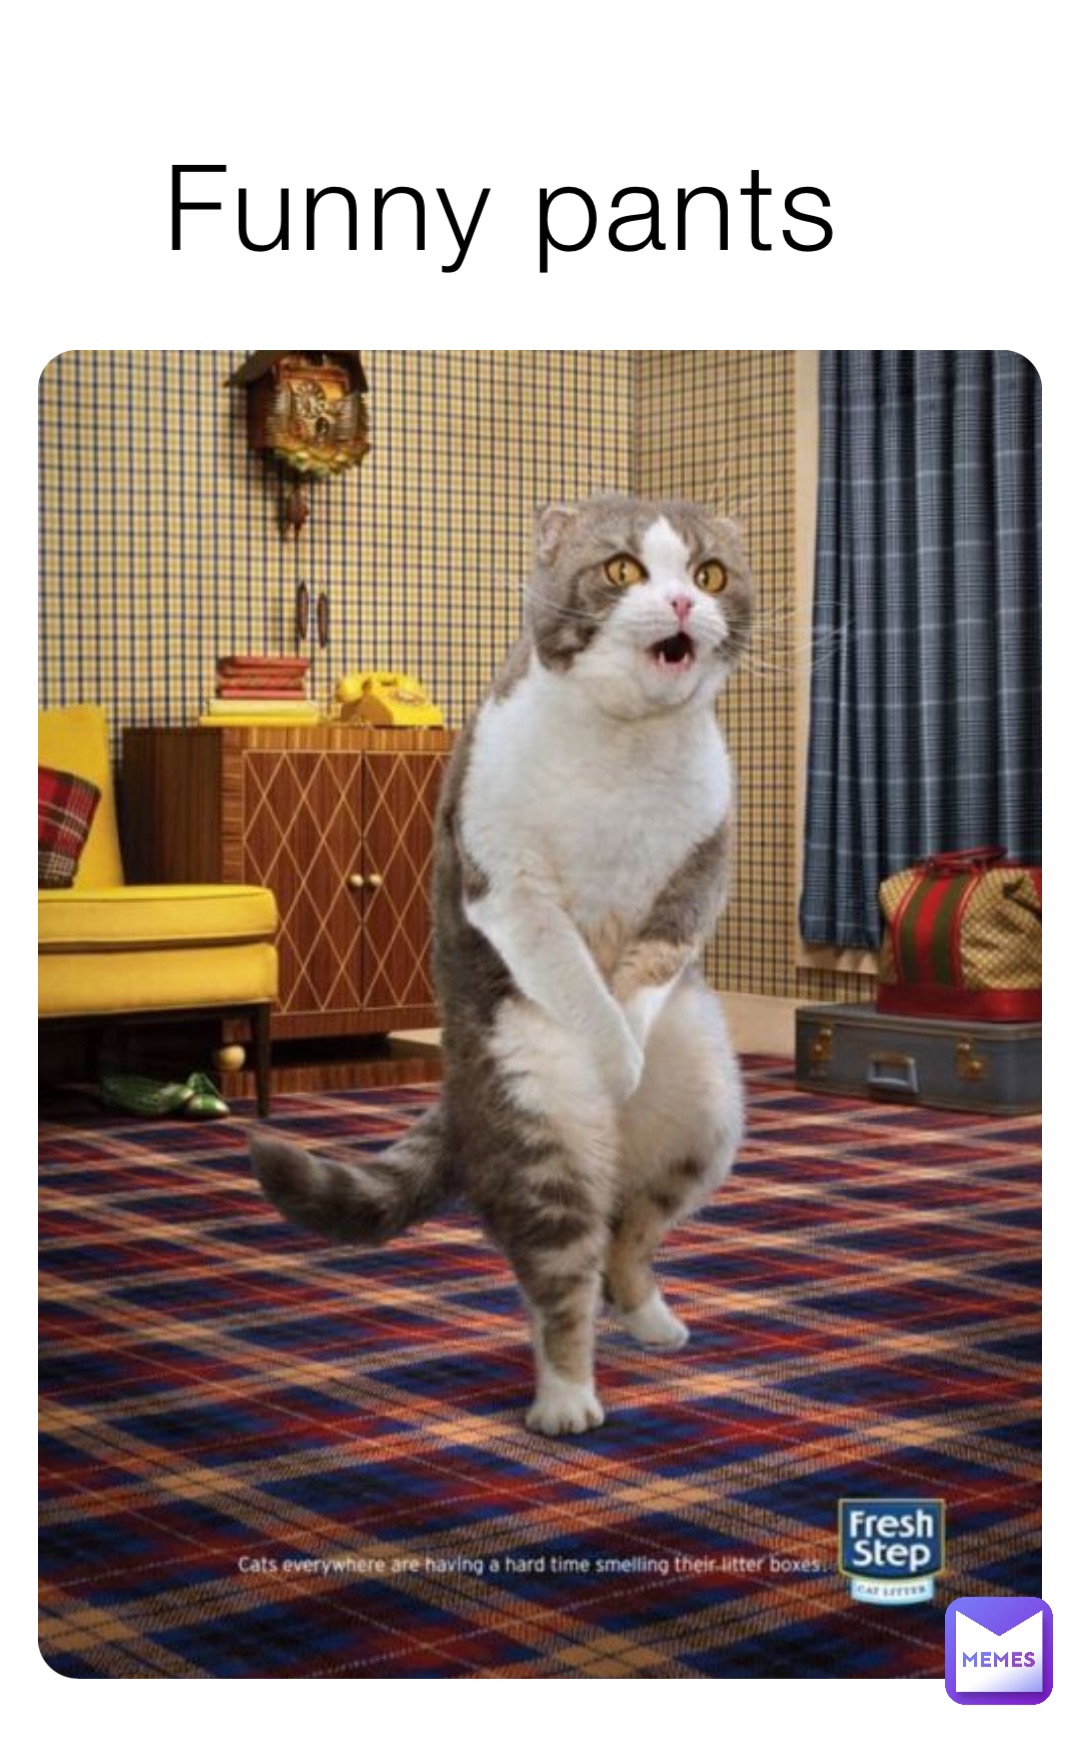 This cat has no pants : r/meme